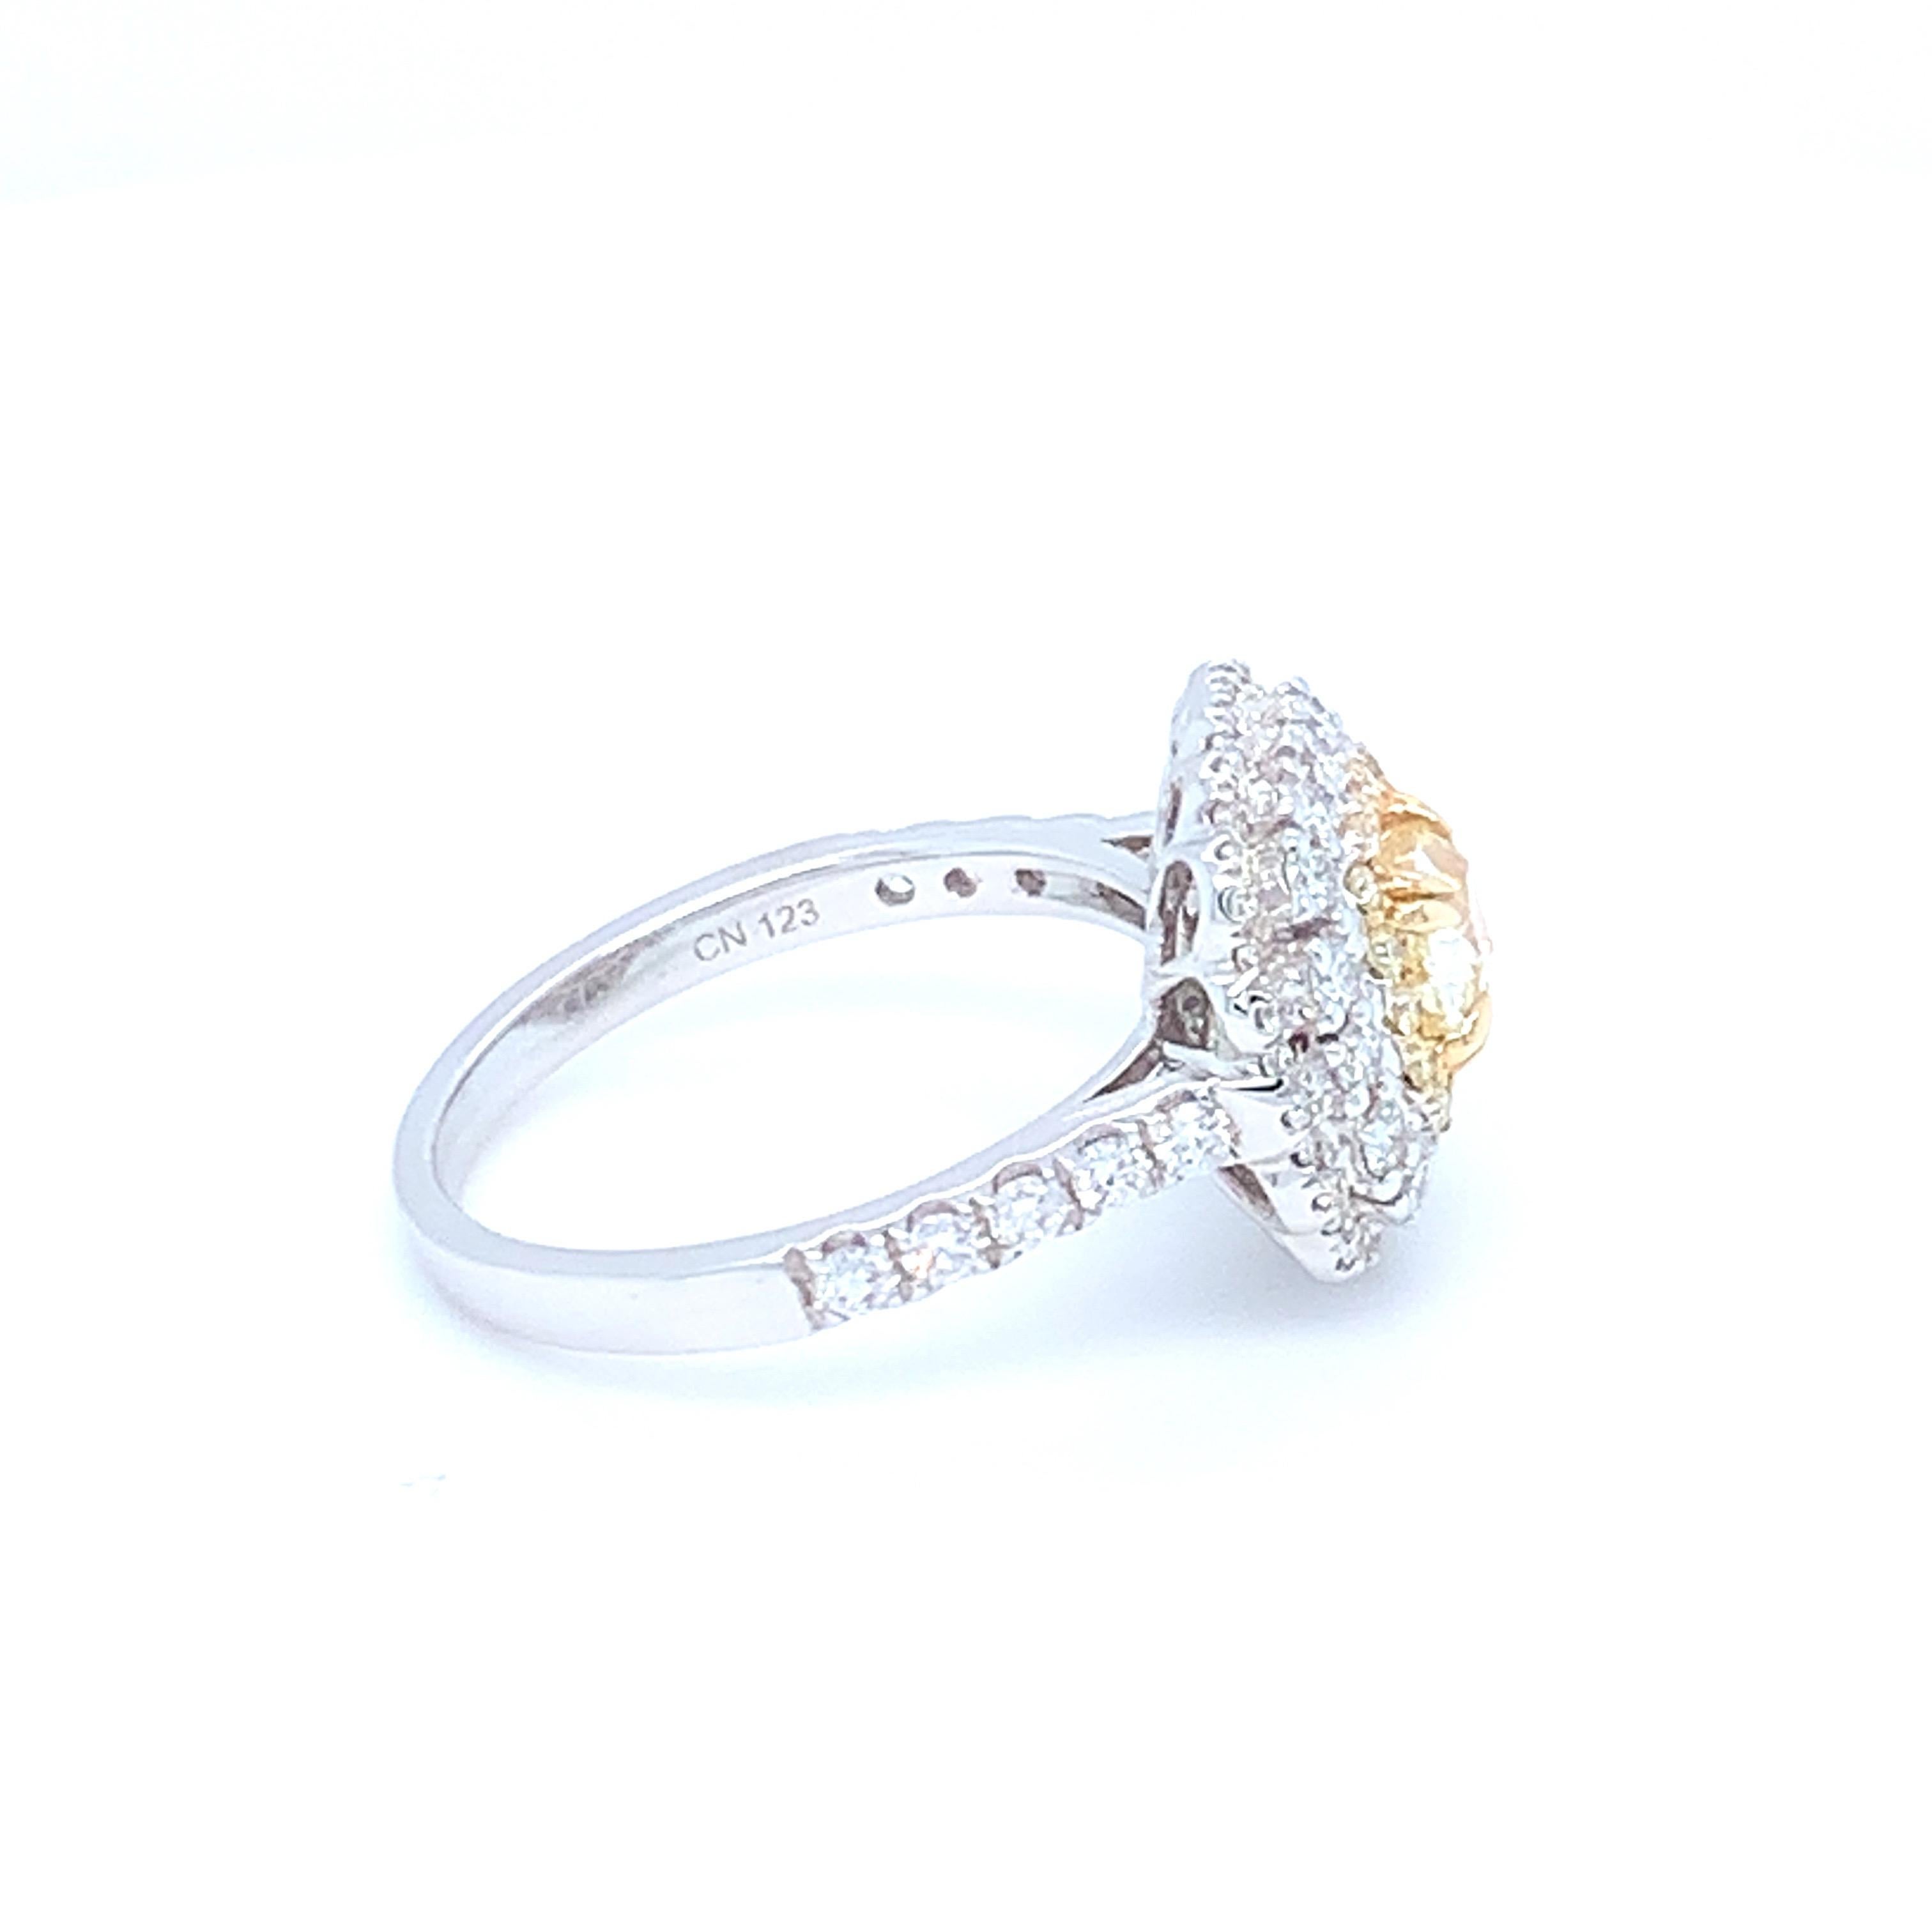 Cushion Cut 0.69 Carat Cushion Yellow Diamond White Diamond Halo Ring Set in 14 Karat Gold For Sale